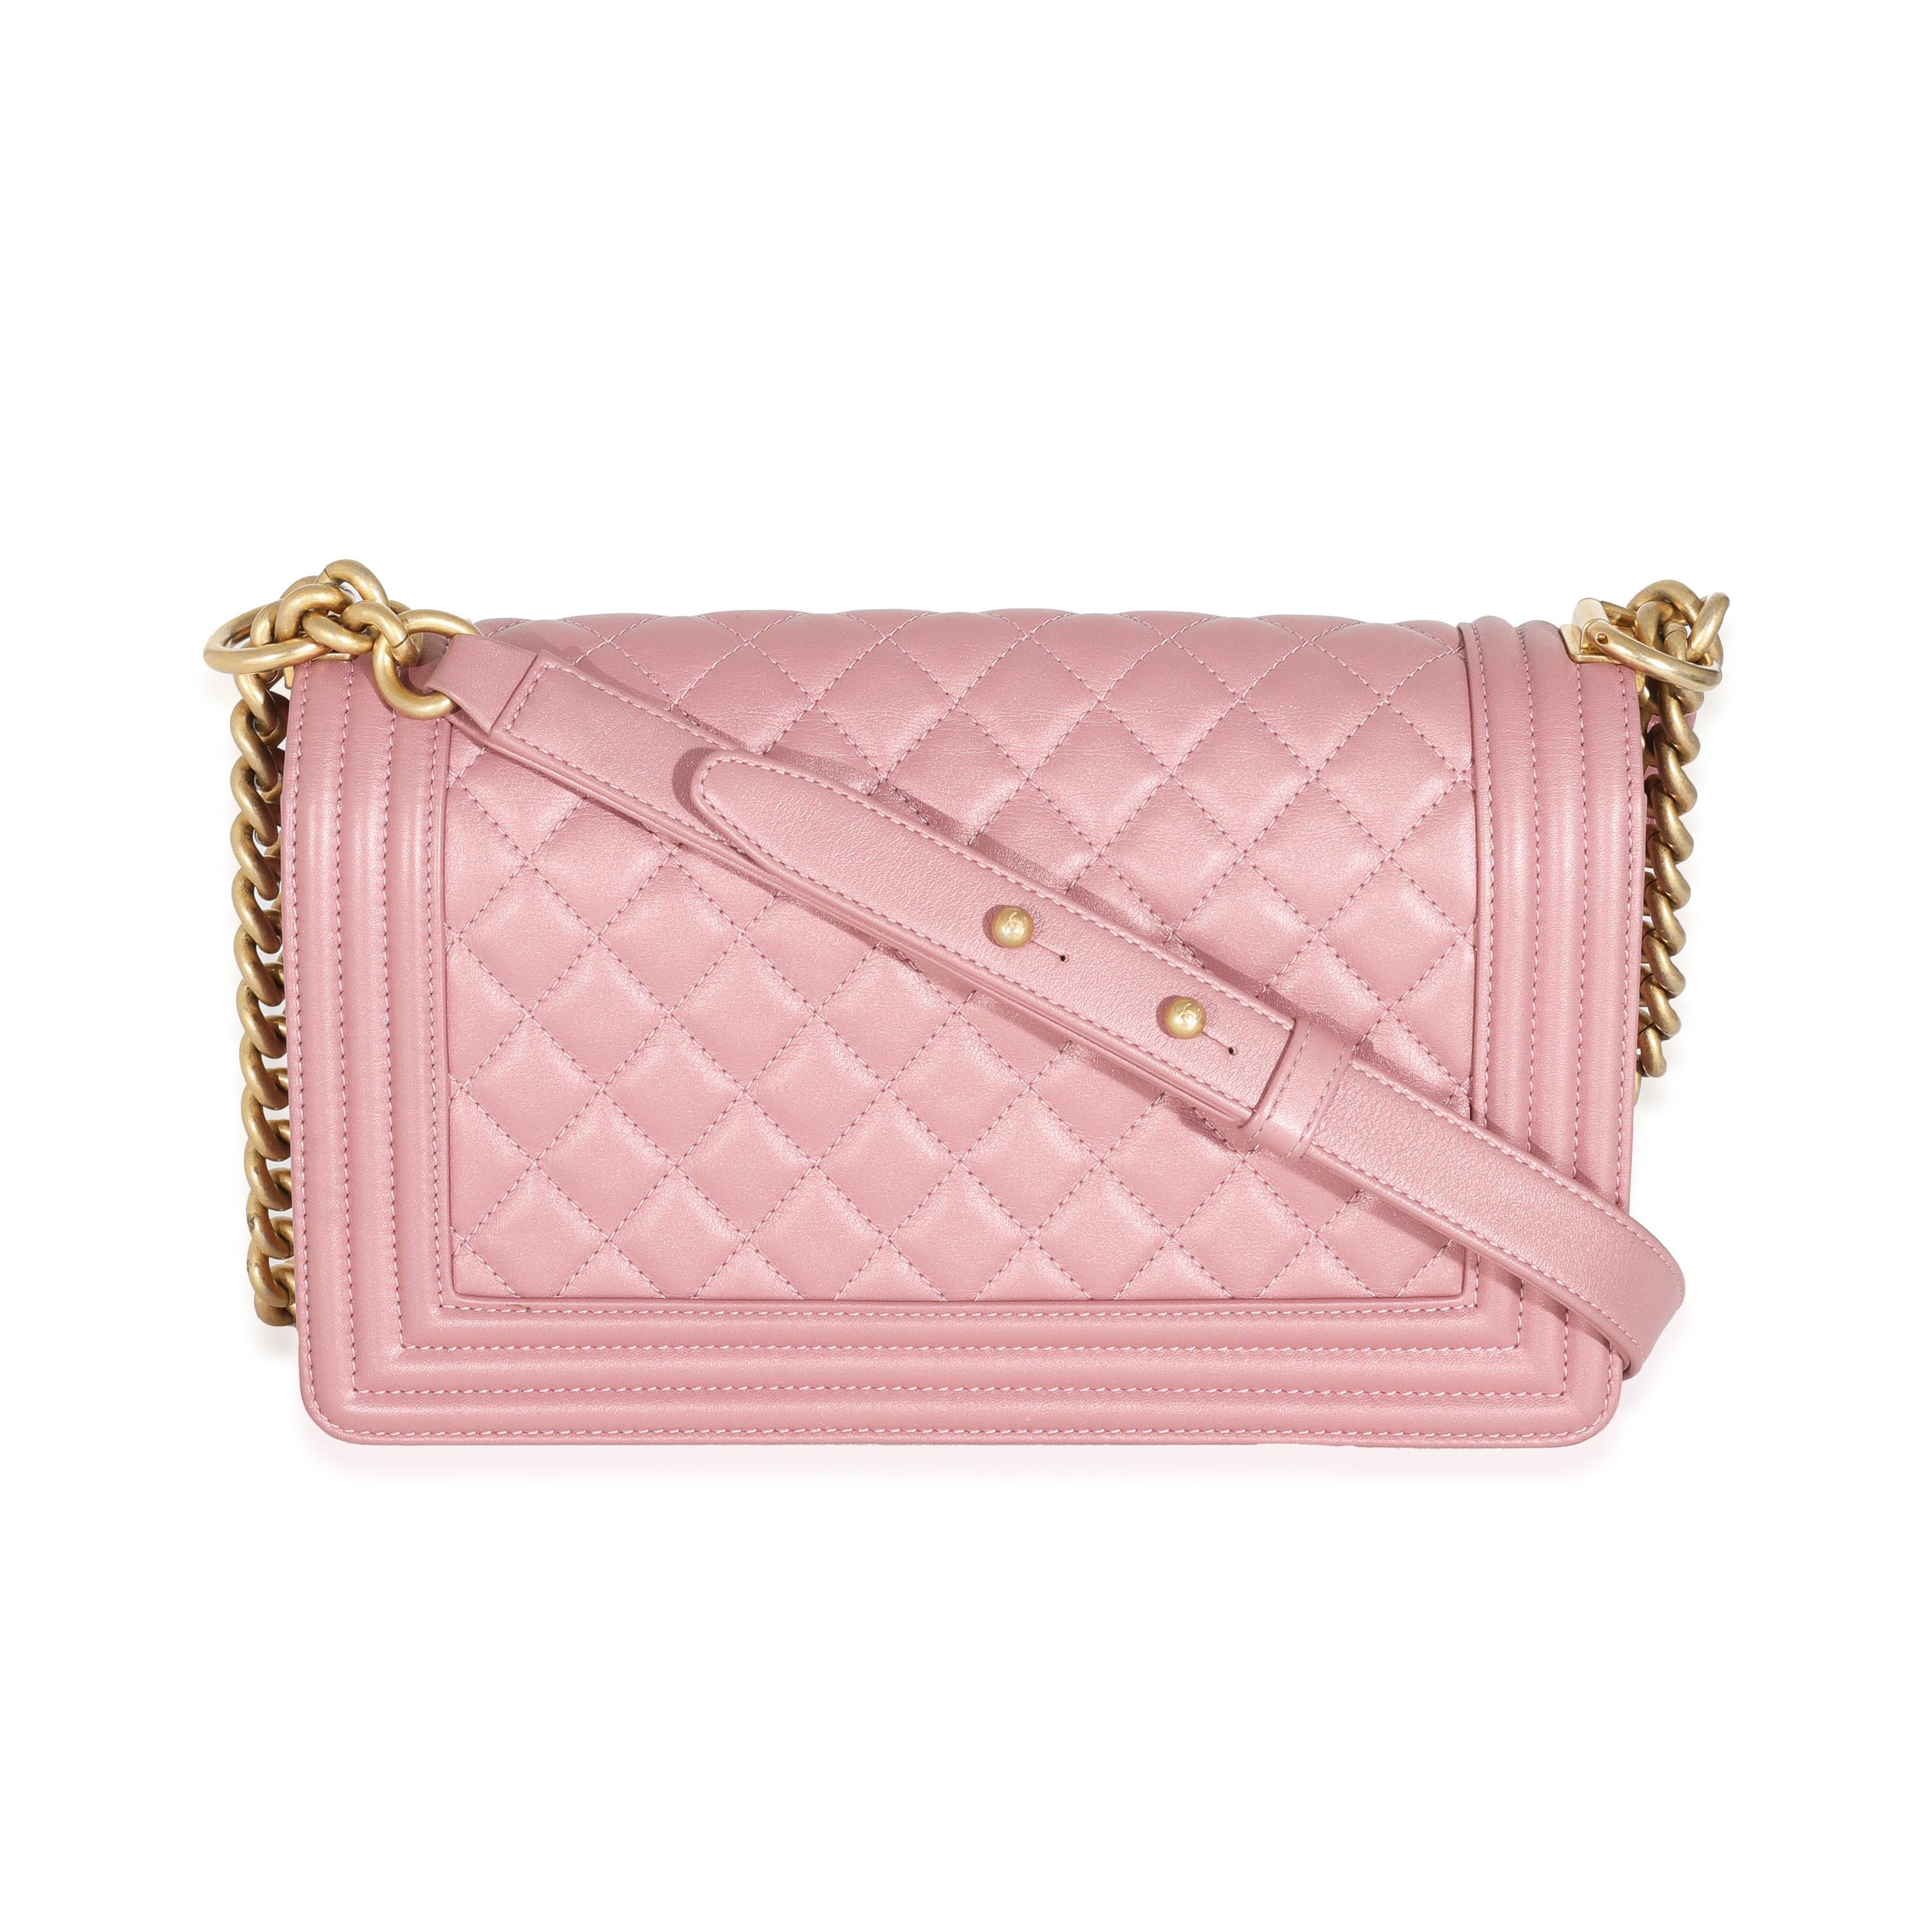 Chanel Metallic Pink Calfskin Medium Boy Bag 4